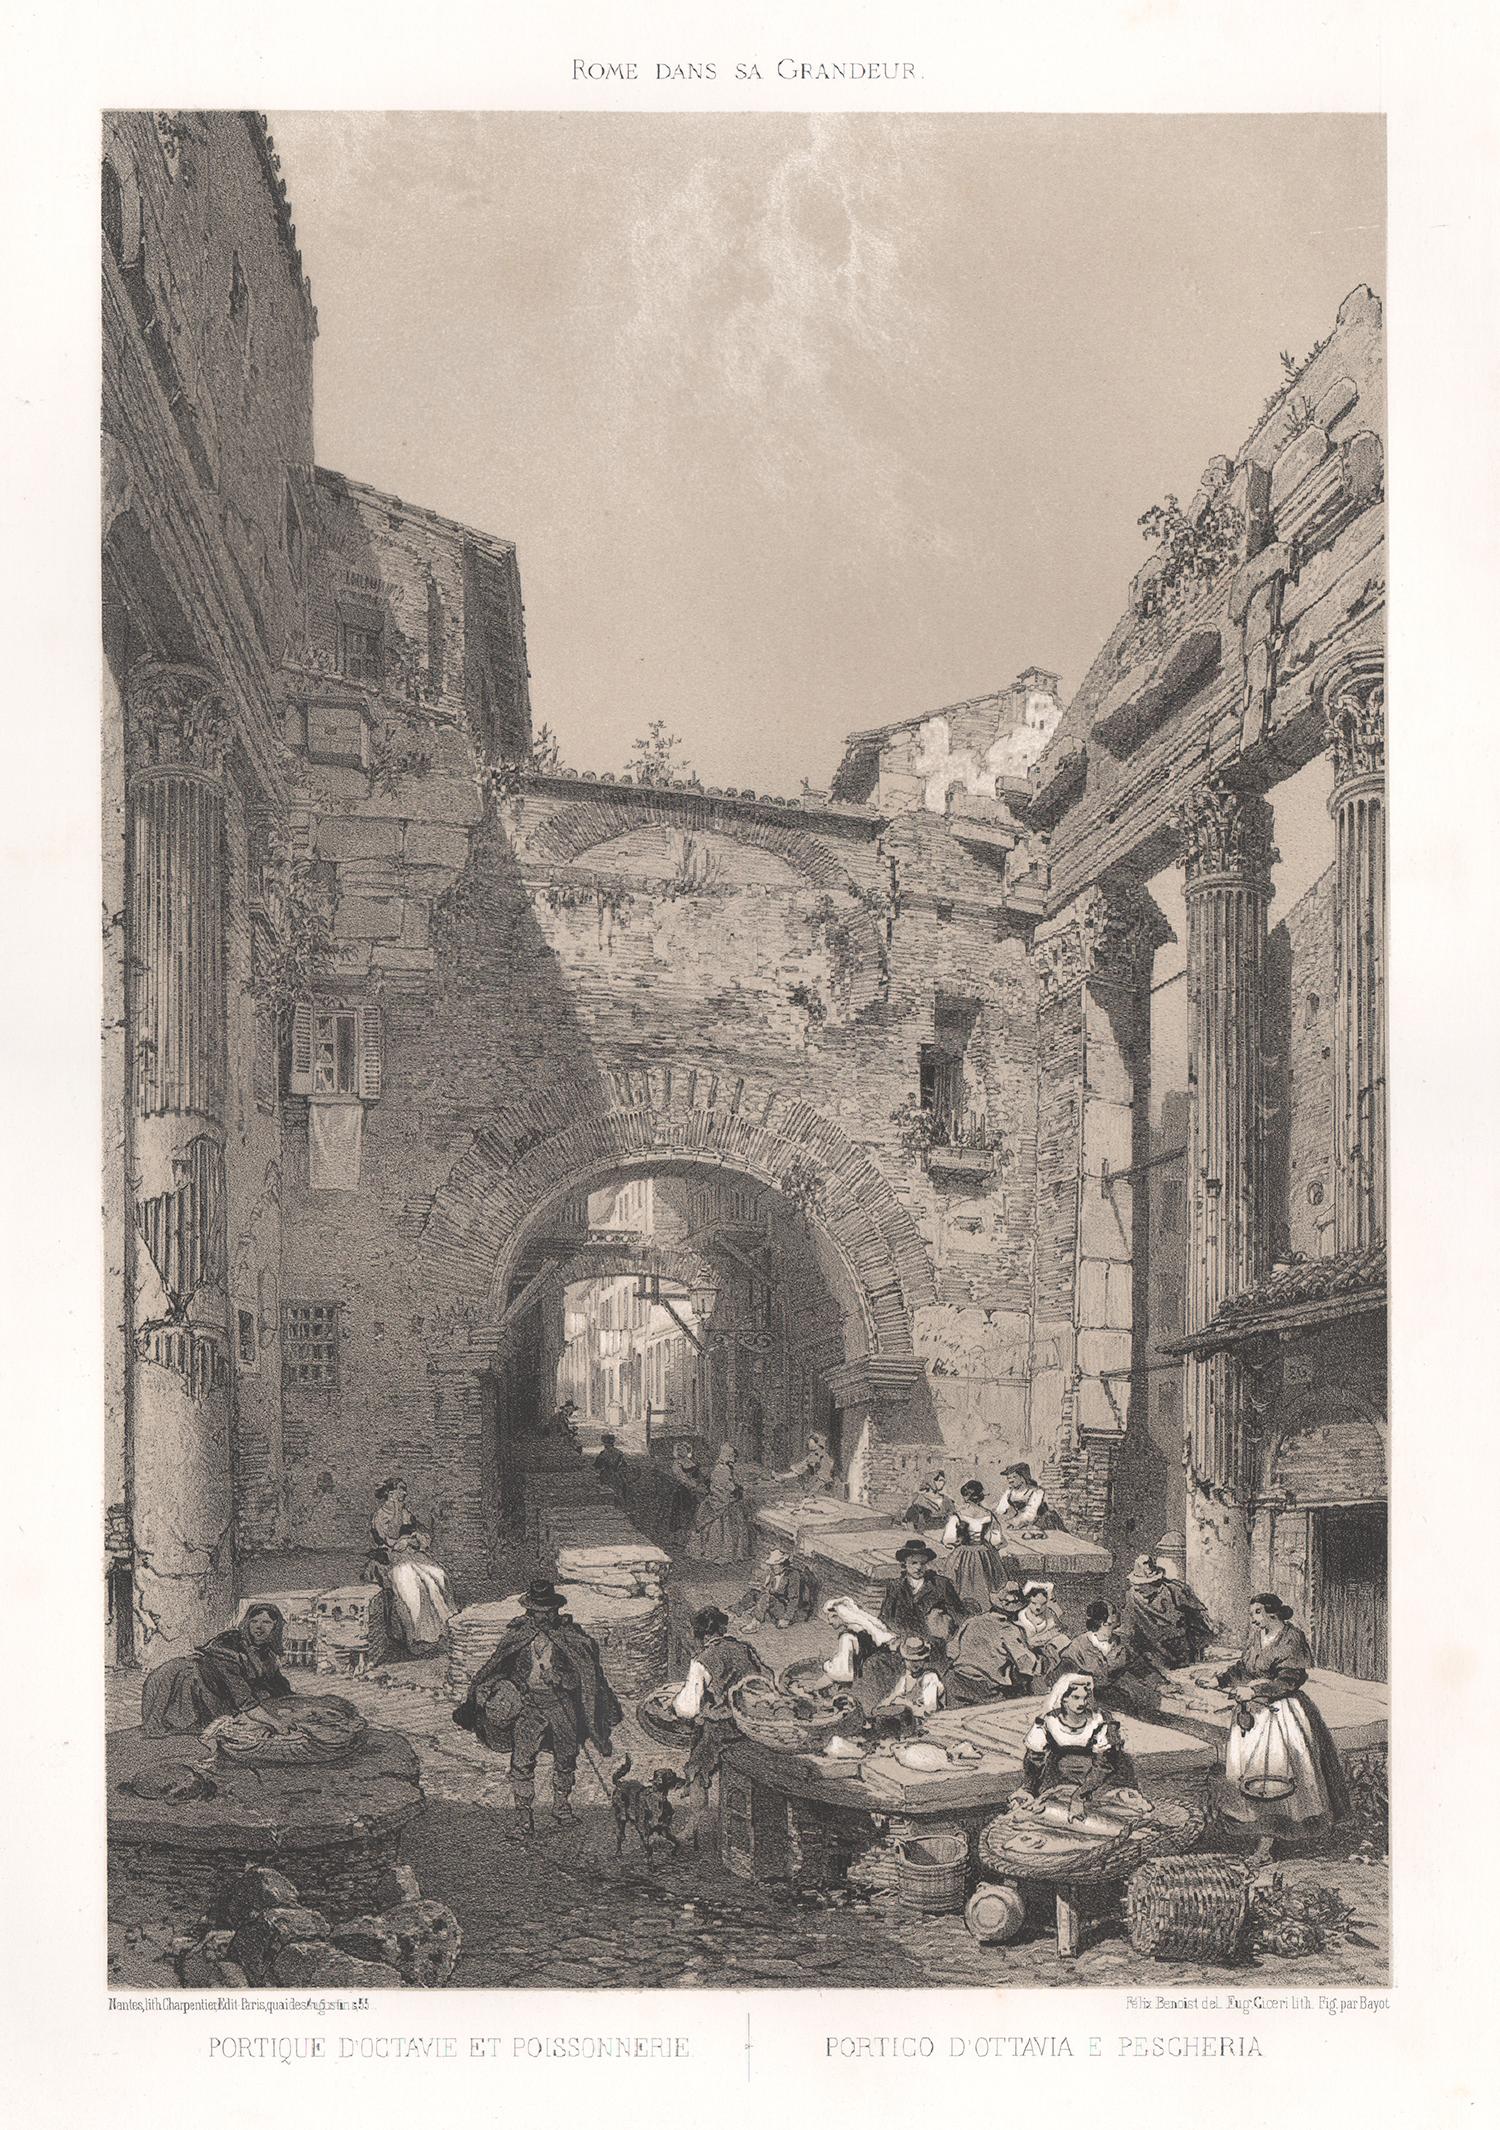 Portico D' Ottavia e Pescheria, Rome Italy. Tinted lithograph, Felix Benoist